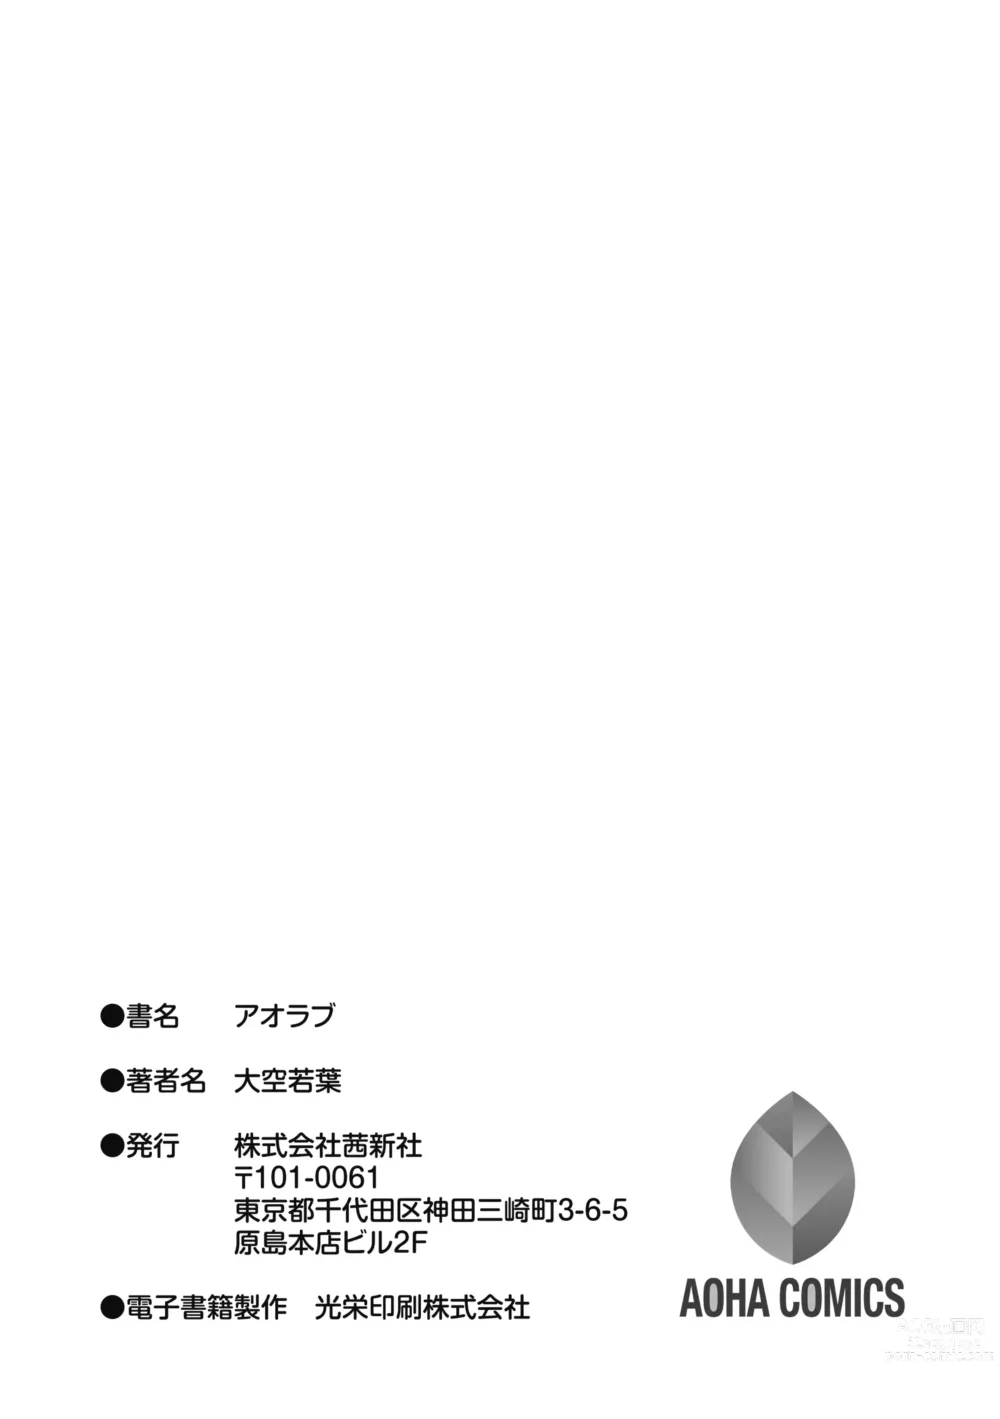 Page 183 of manga Aolove